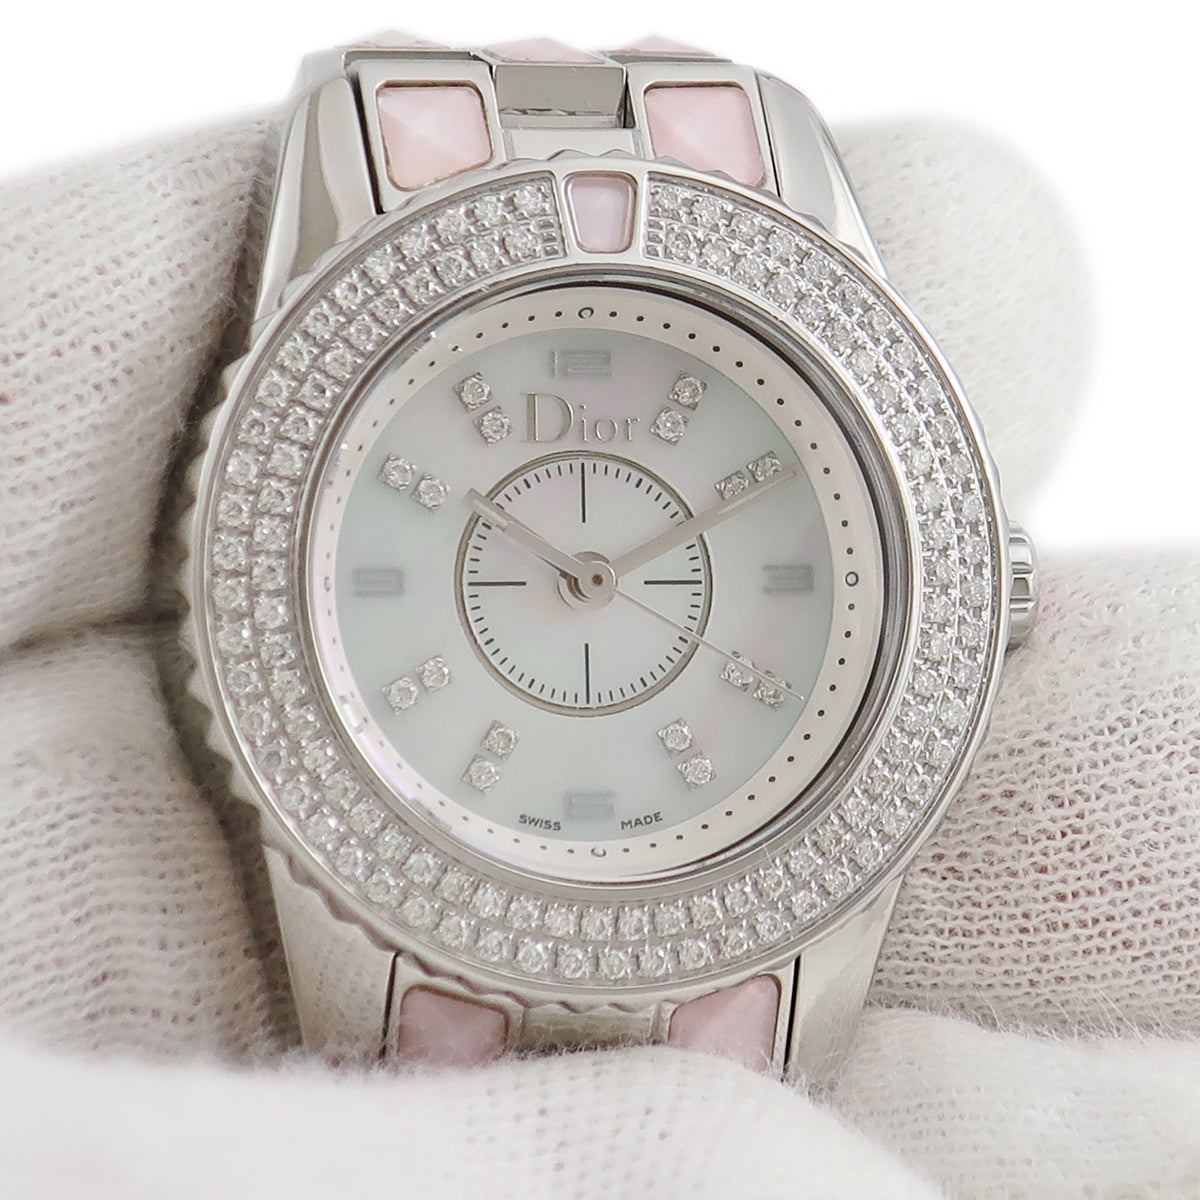 Dior 腕時計 クリスタル ホワイト レディース Christian Dior